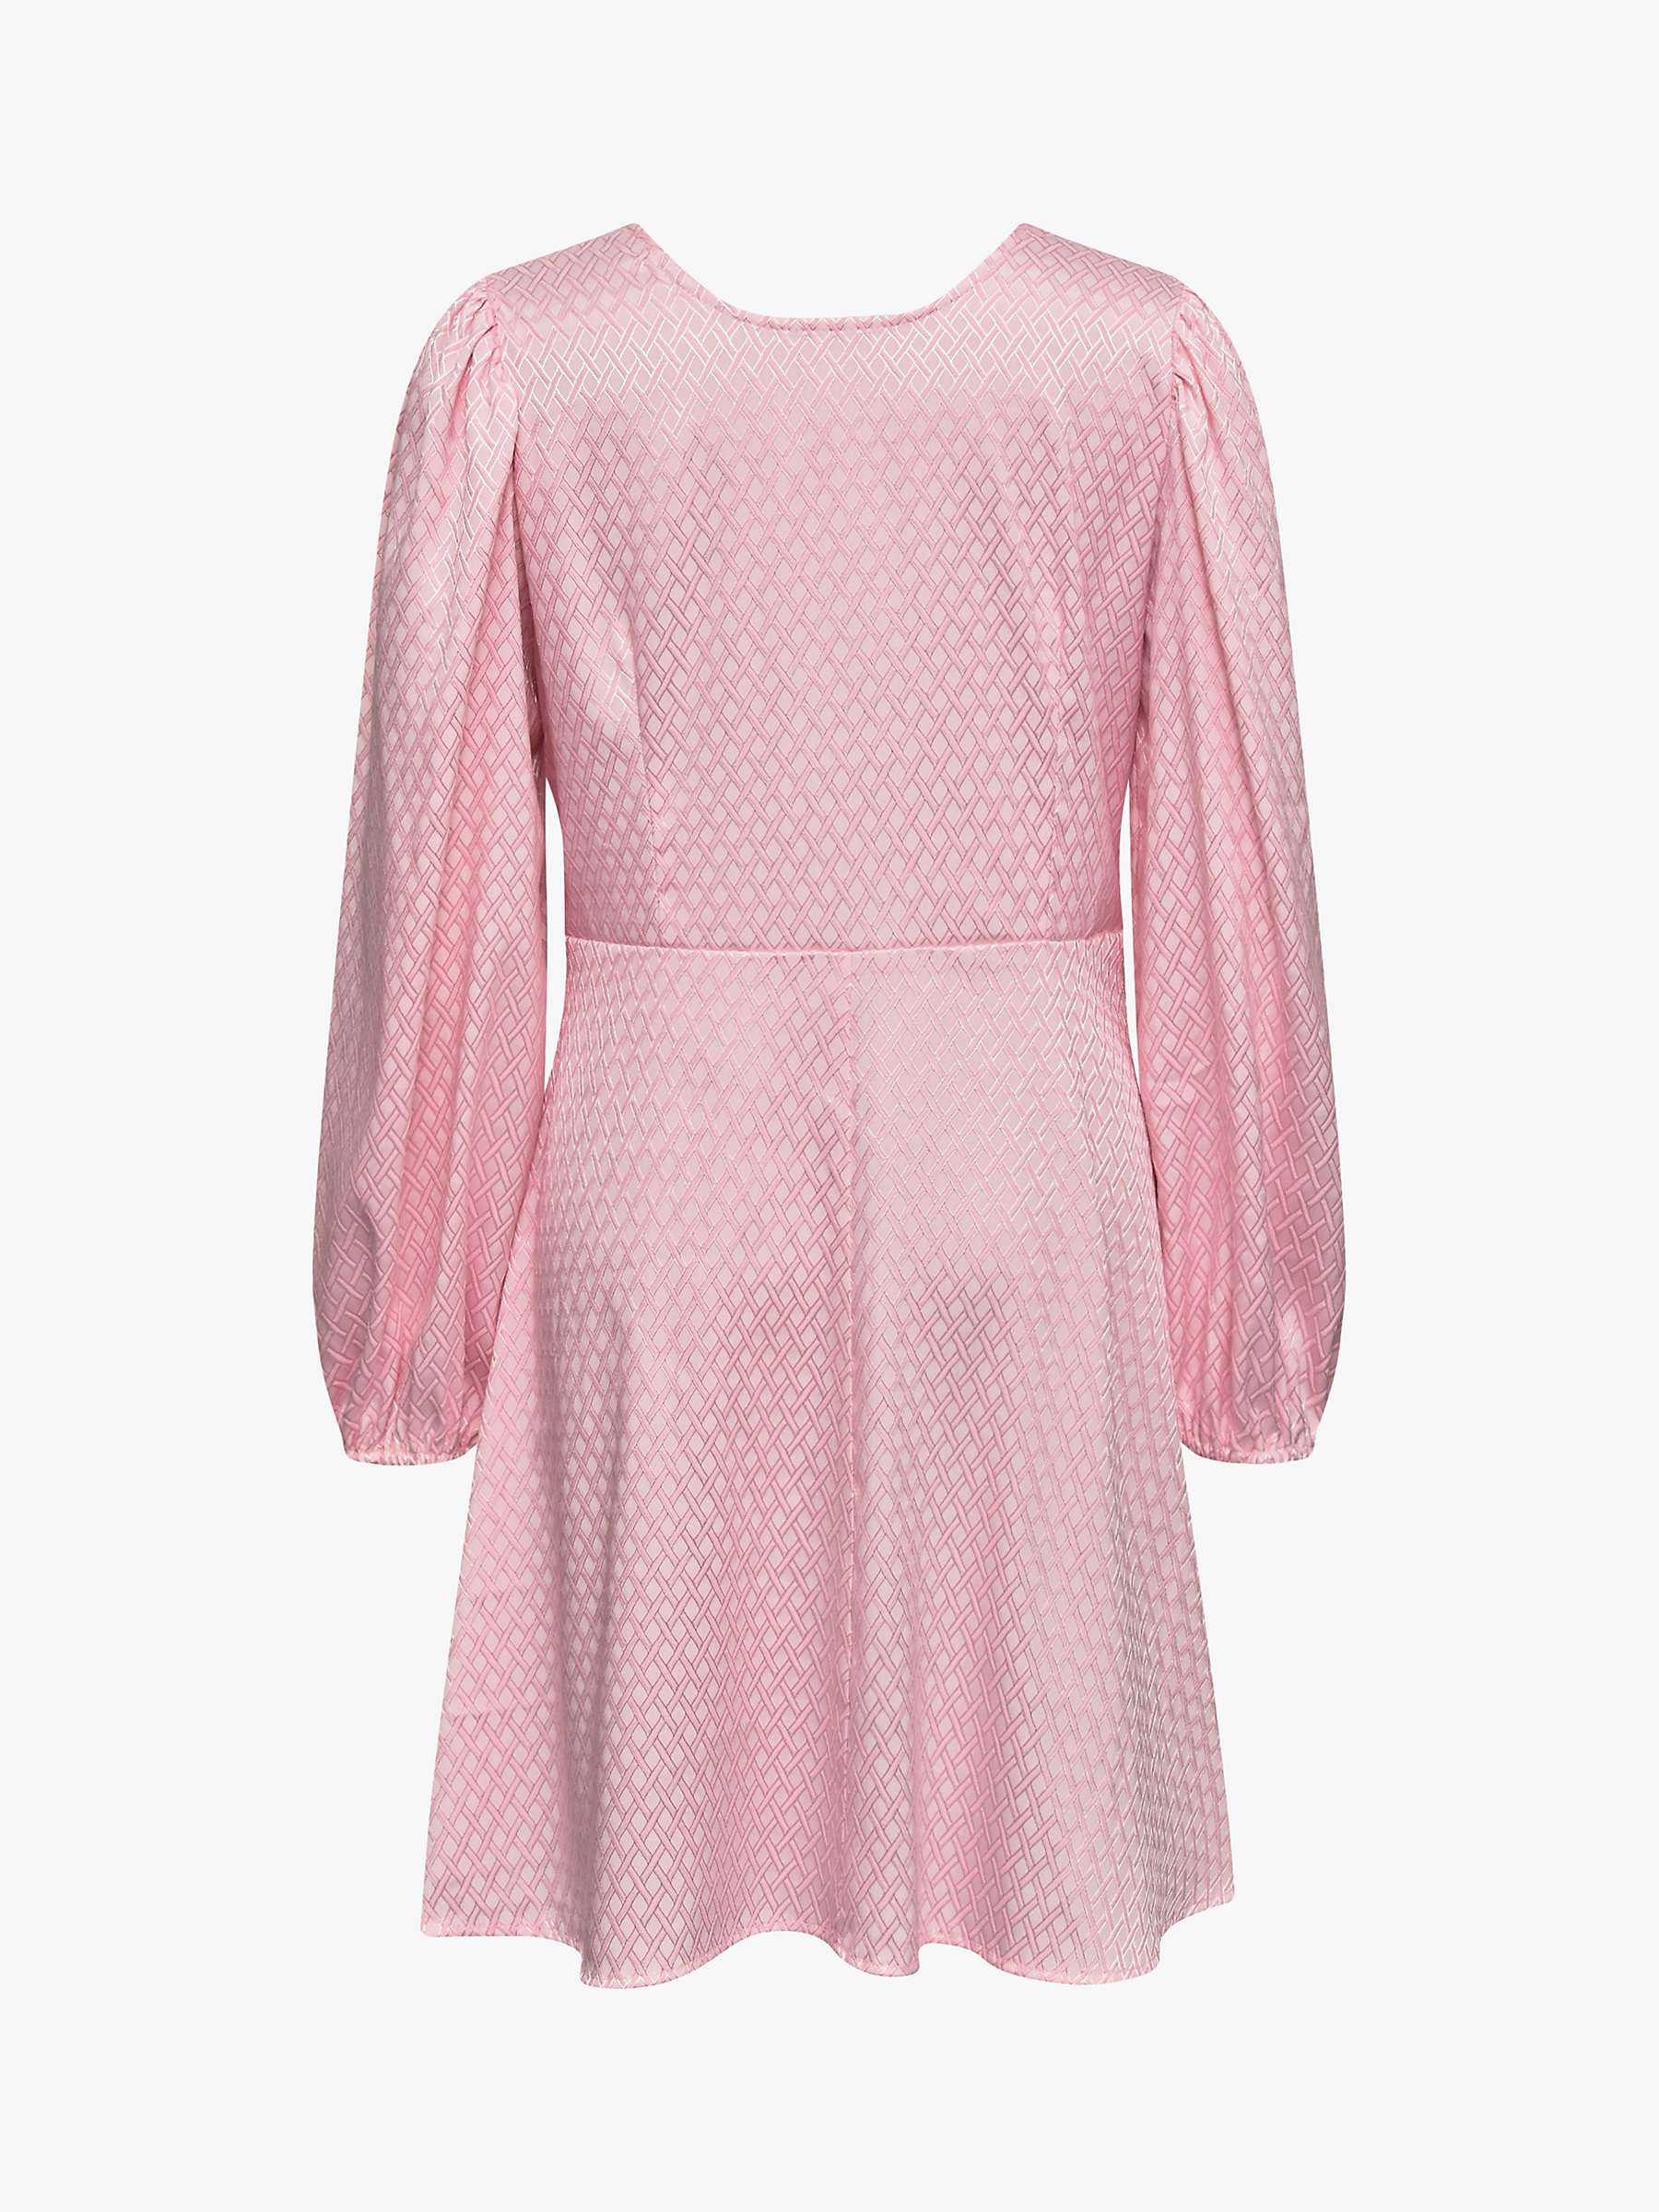 Buy A-VIEW Enitta V-Neck Dress, 298 Rose Online at johnlewis.com